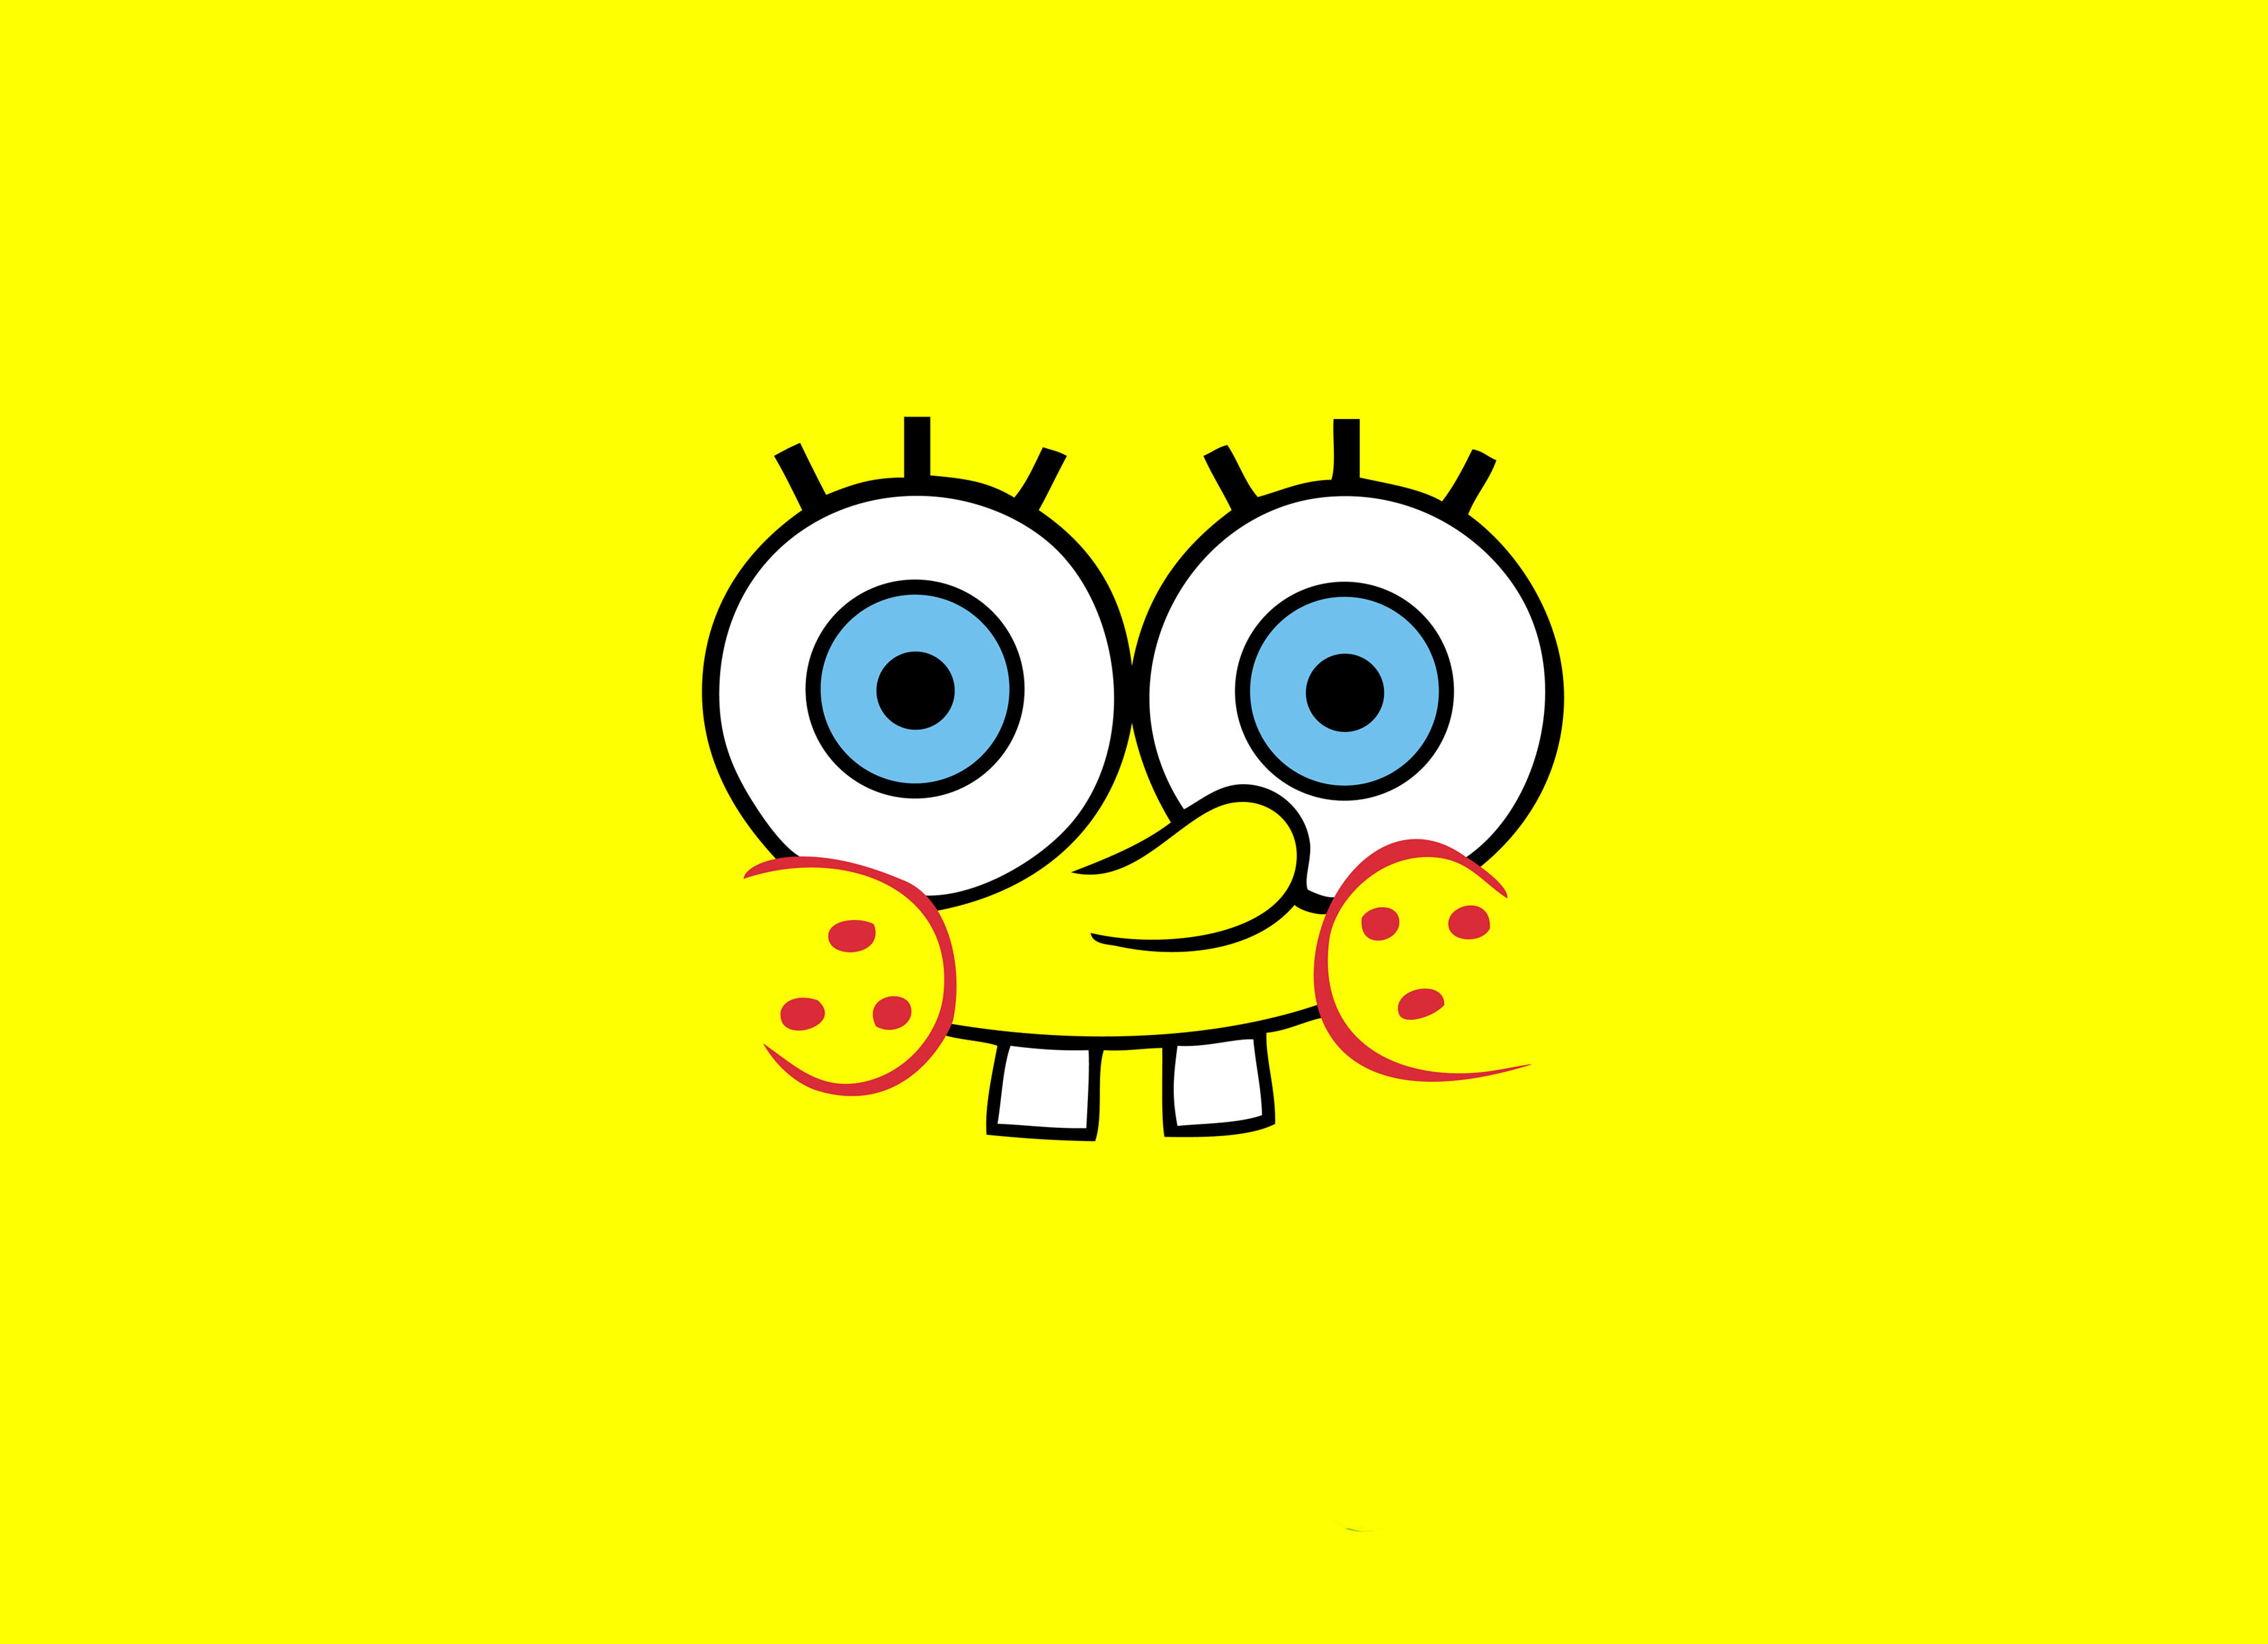  Desktop Wallpaper on Spongebob Squarepants Cartoon Hd Wallpaper Of Cartoon   Animation